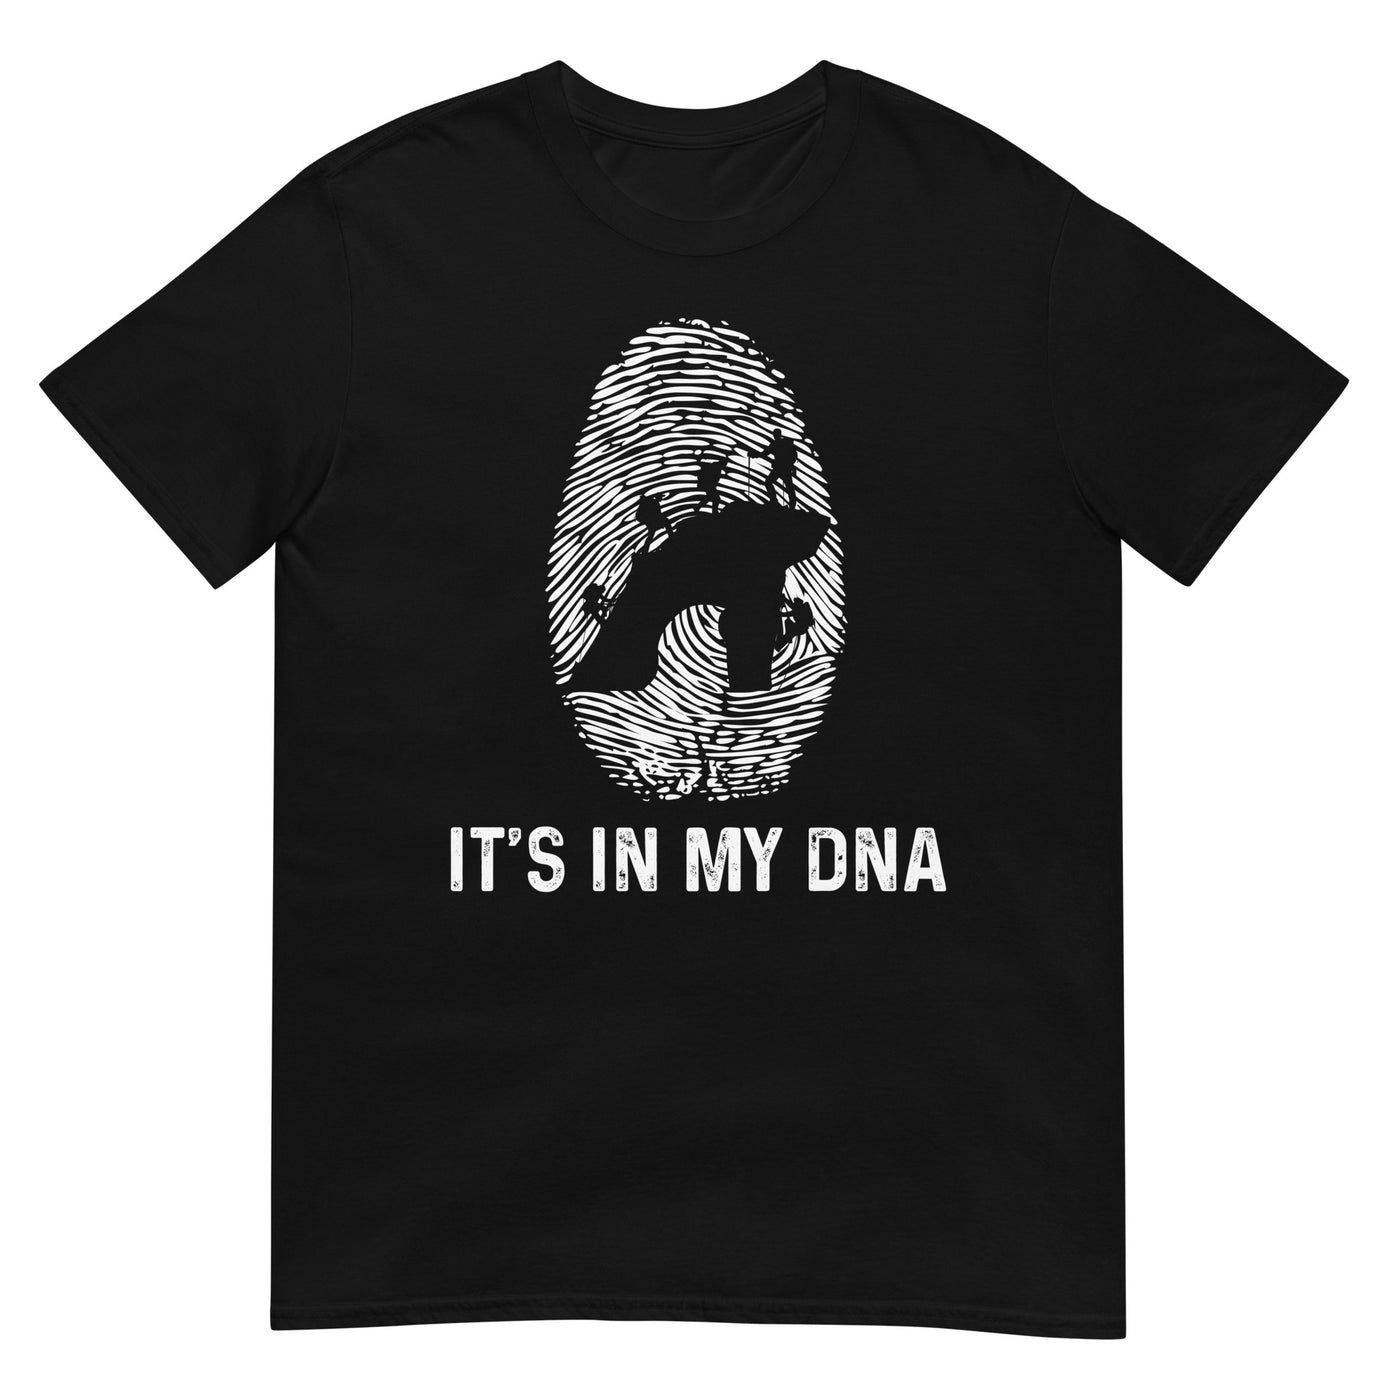 It's In My DNA - T-Shirt (Unisex) klettern xxx yyy zzz Black